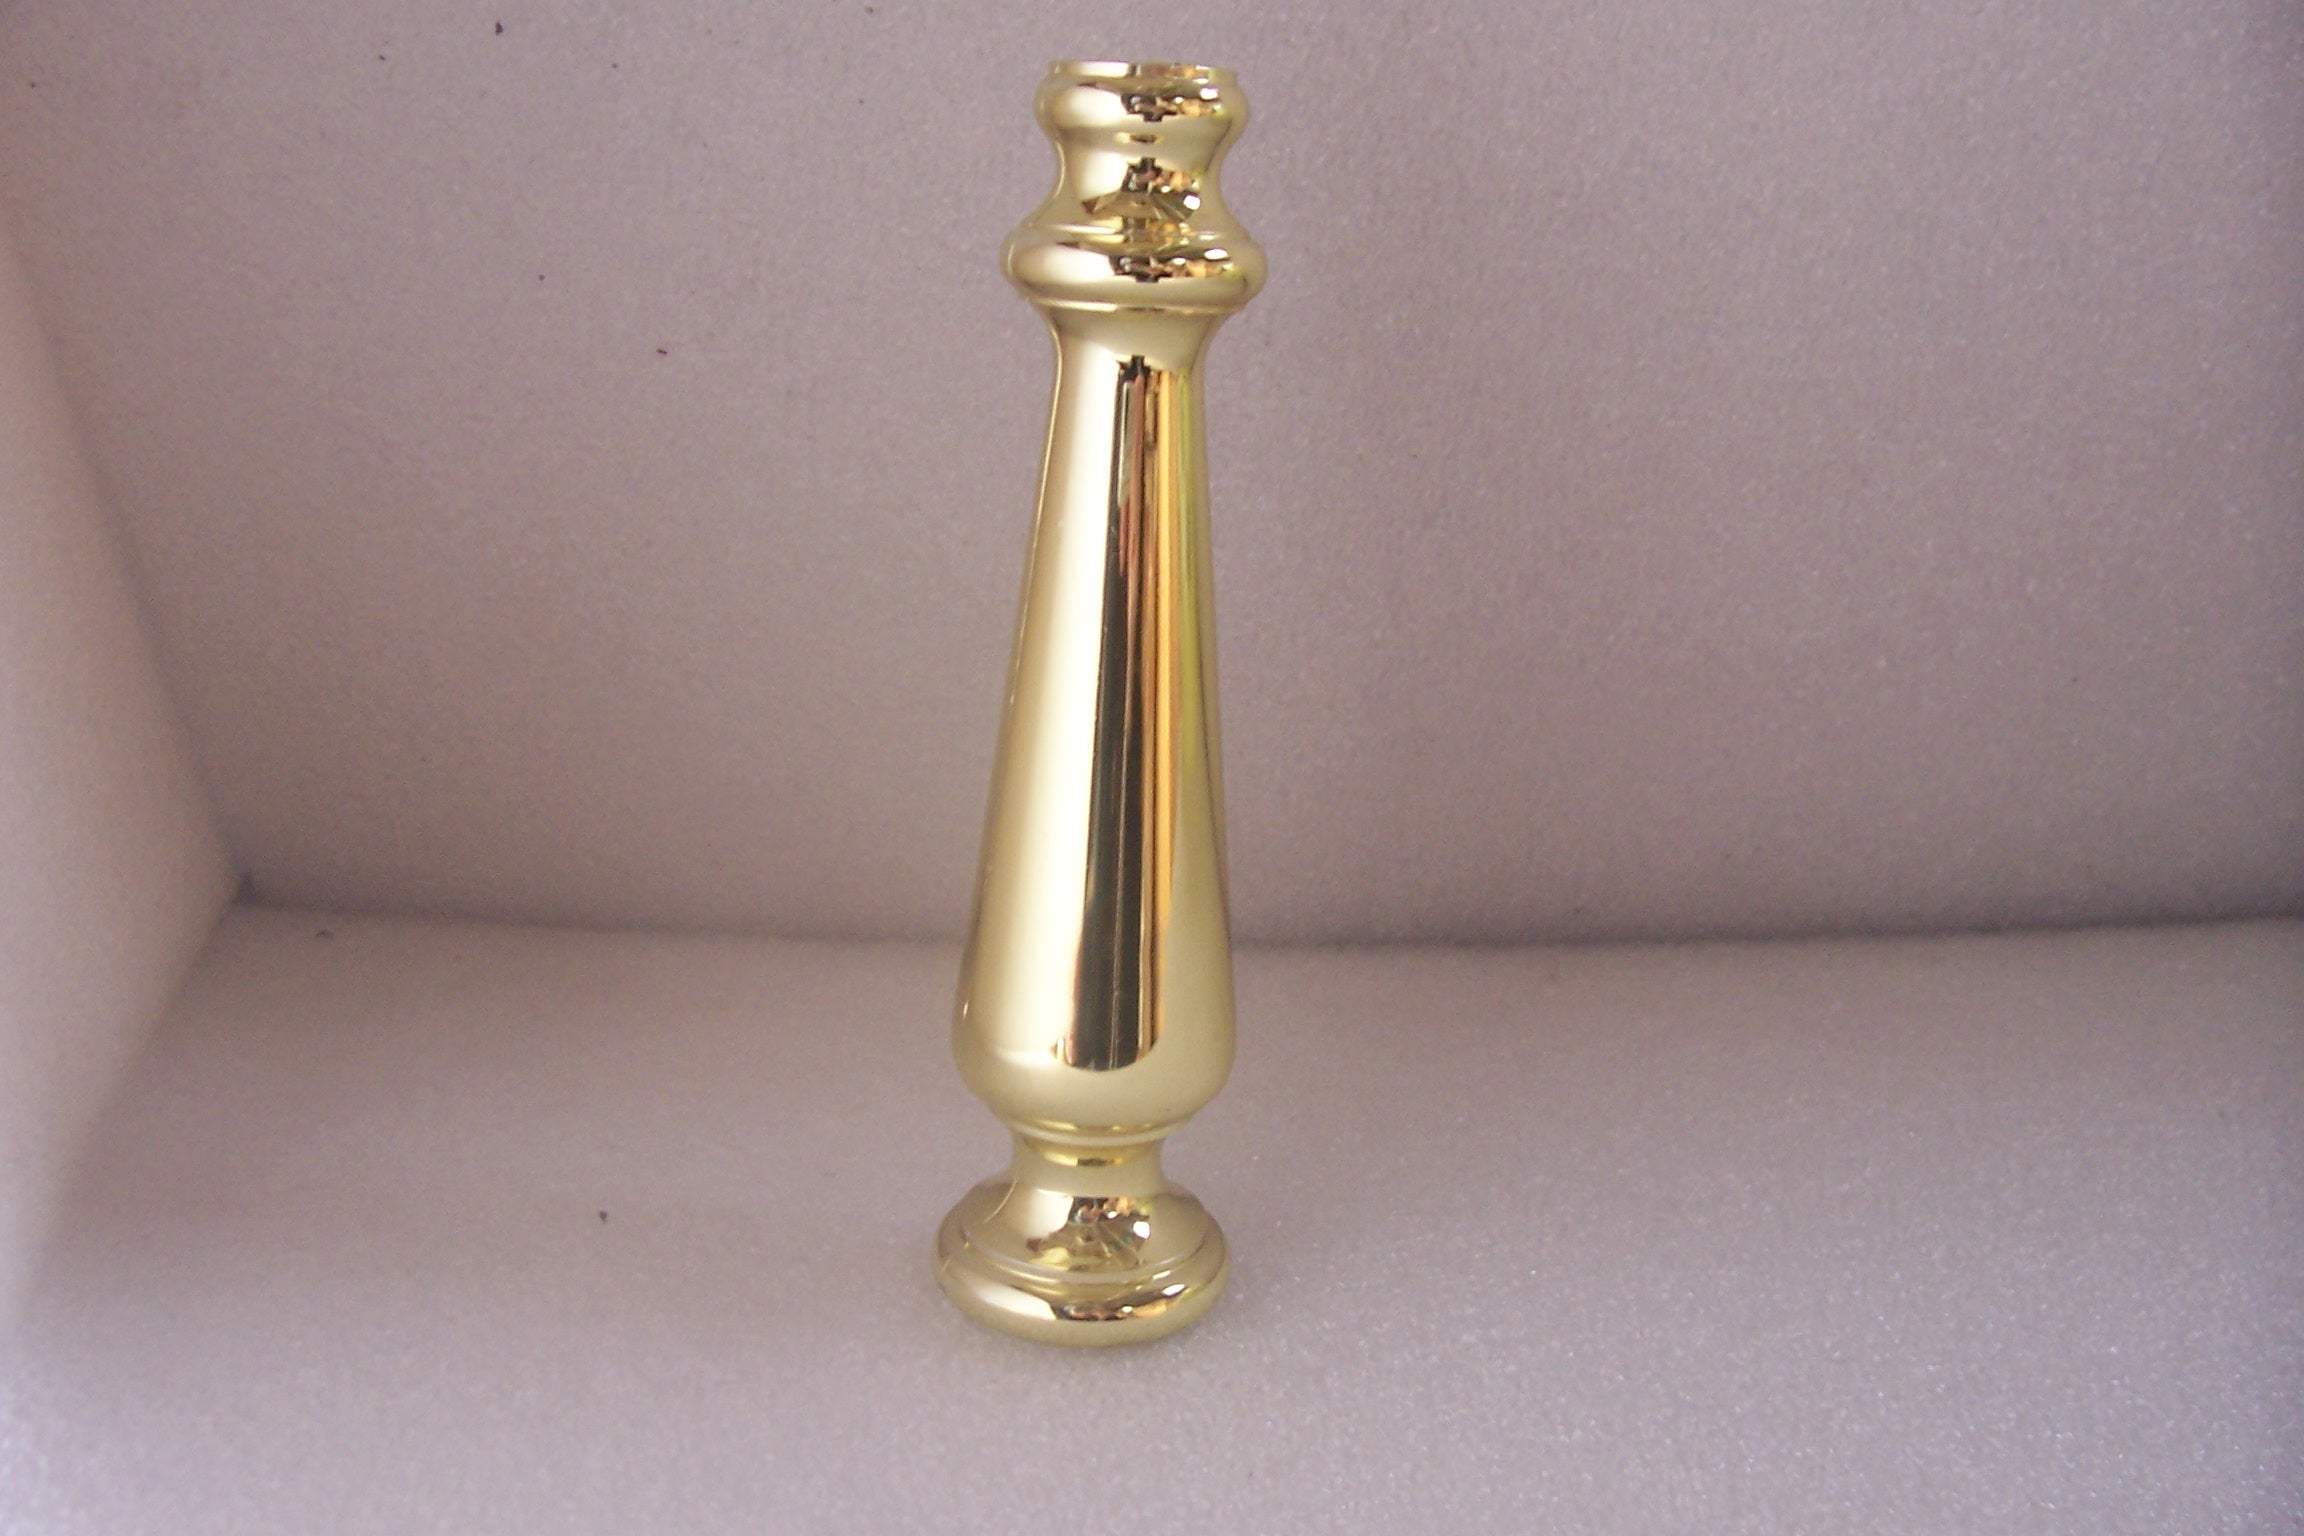 Shine Brass Plastic Neck Piece - 5.5 inches tall